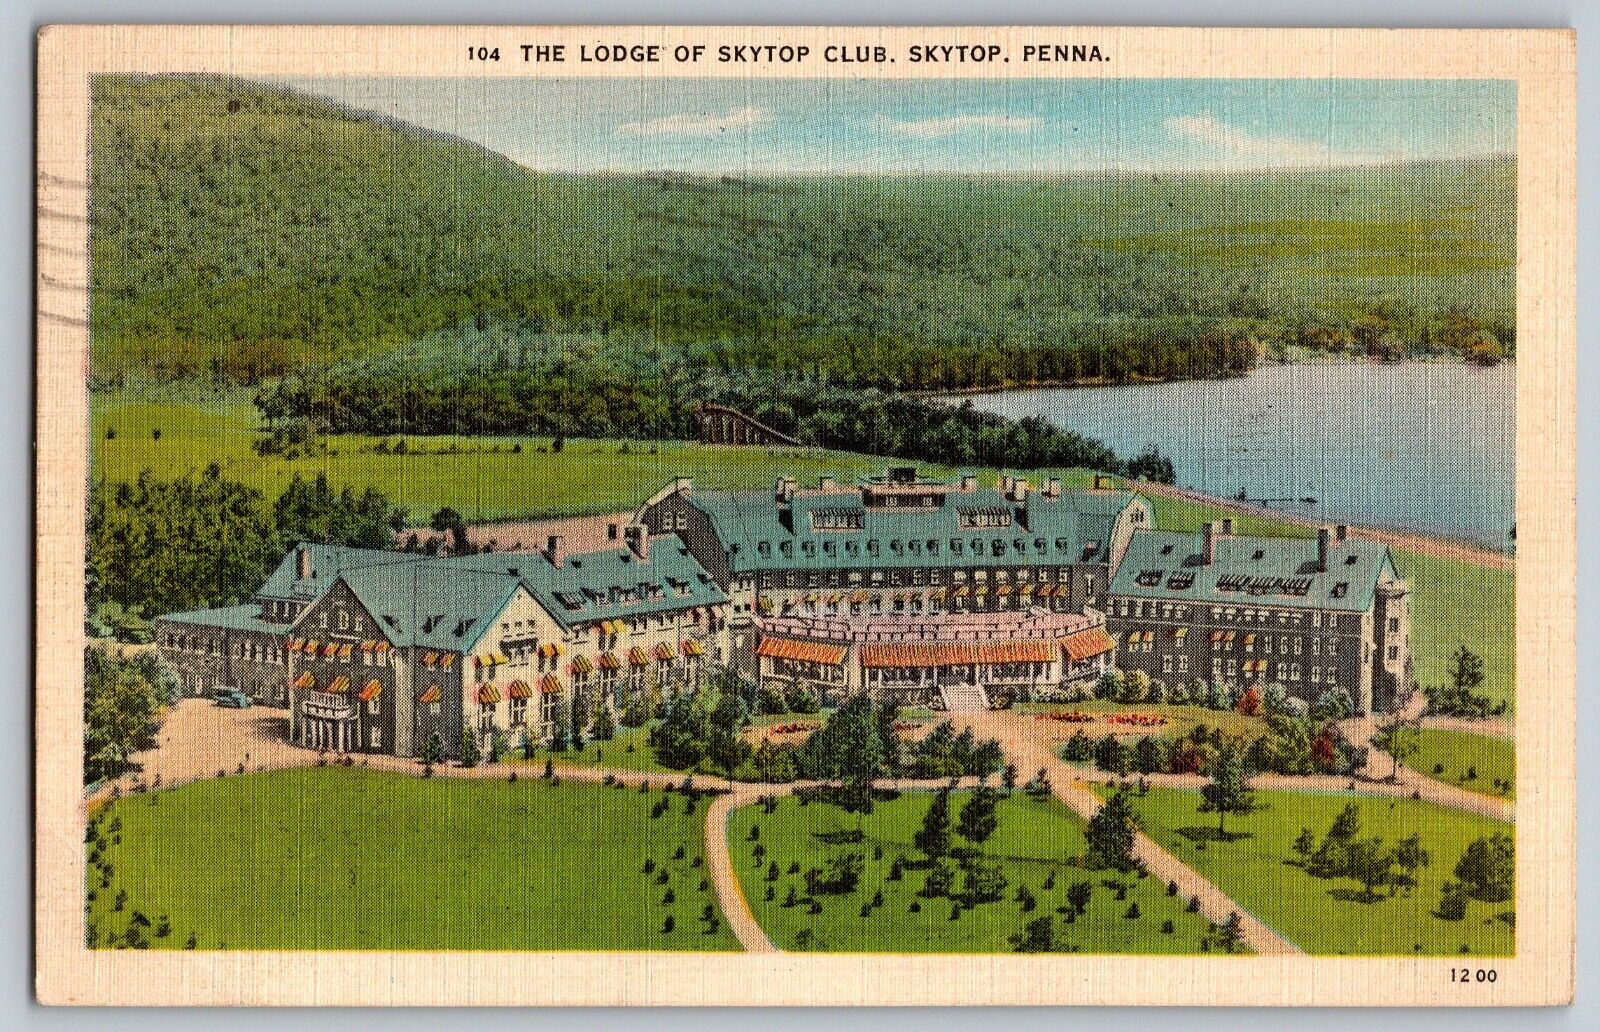 Skytop, Pennsylvania - The Lodge of Skytop Club - Vintage Postcard